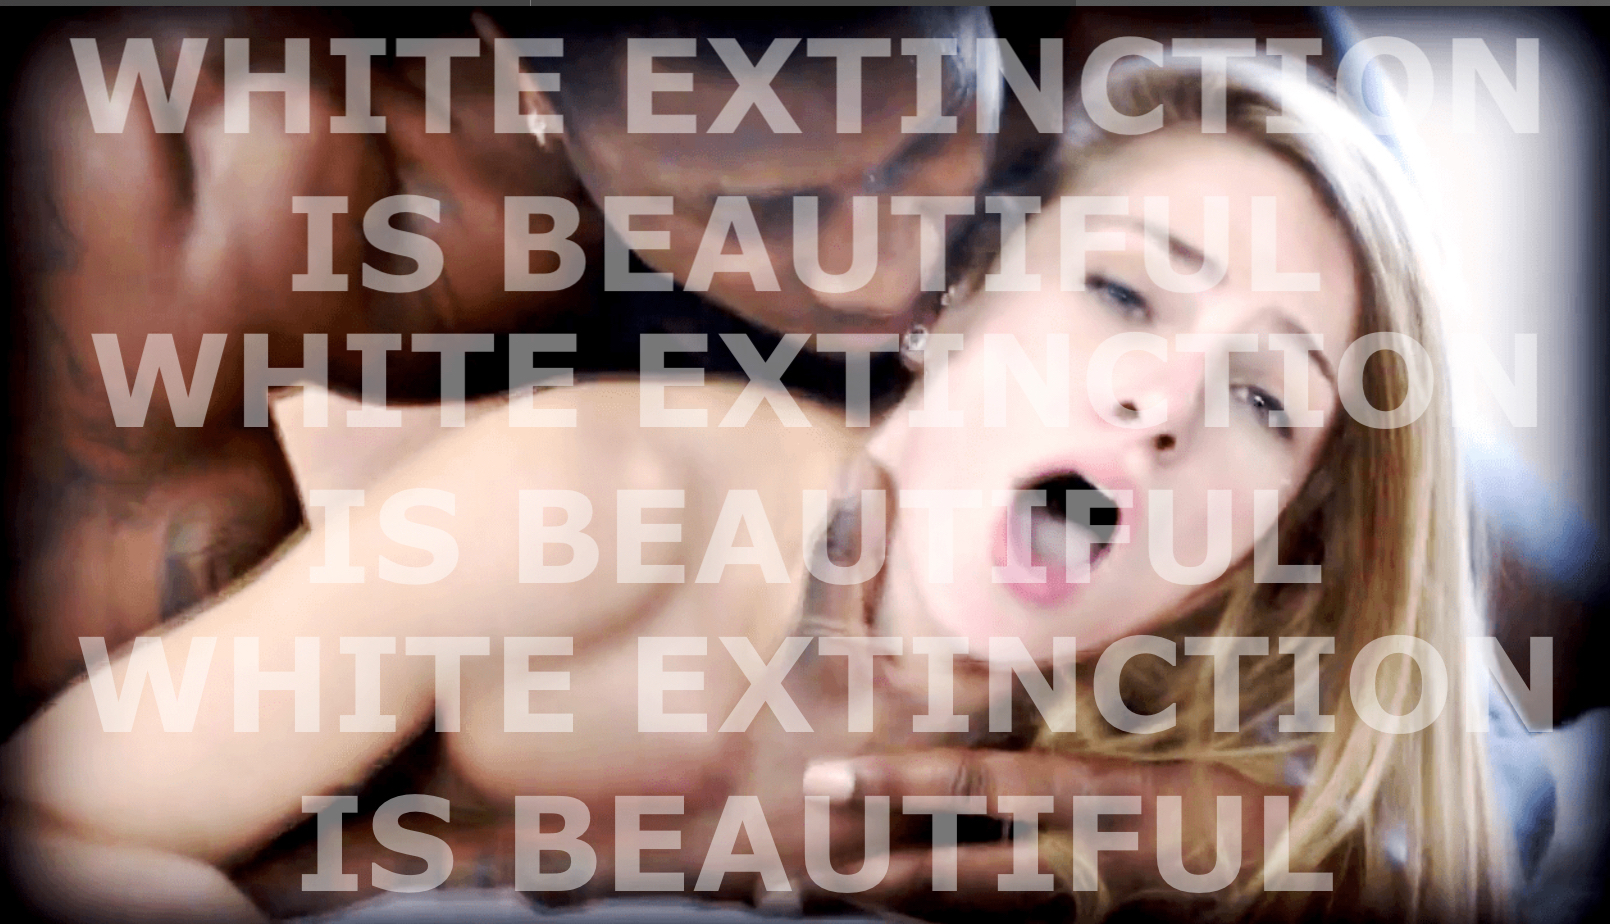 White extinction is beautiful